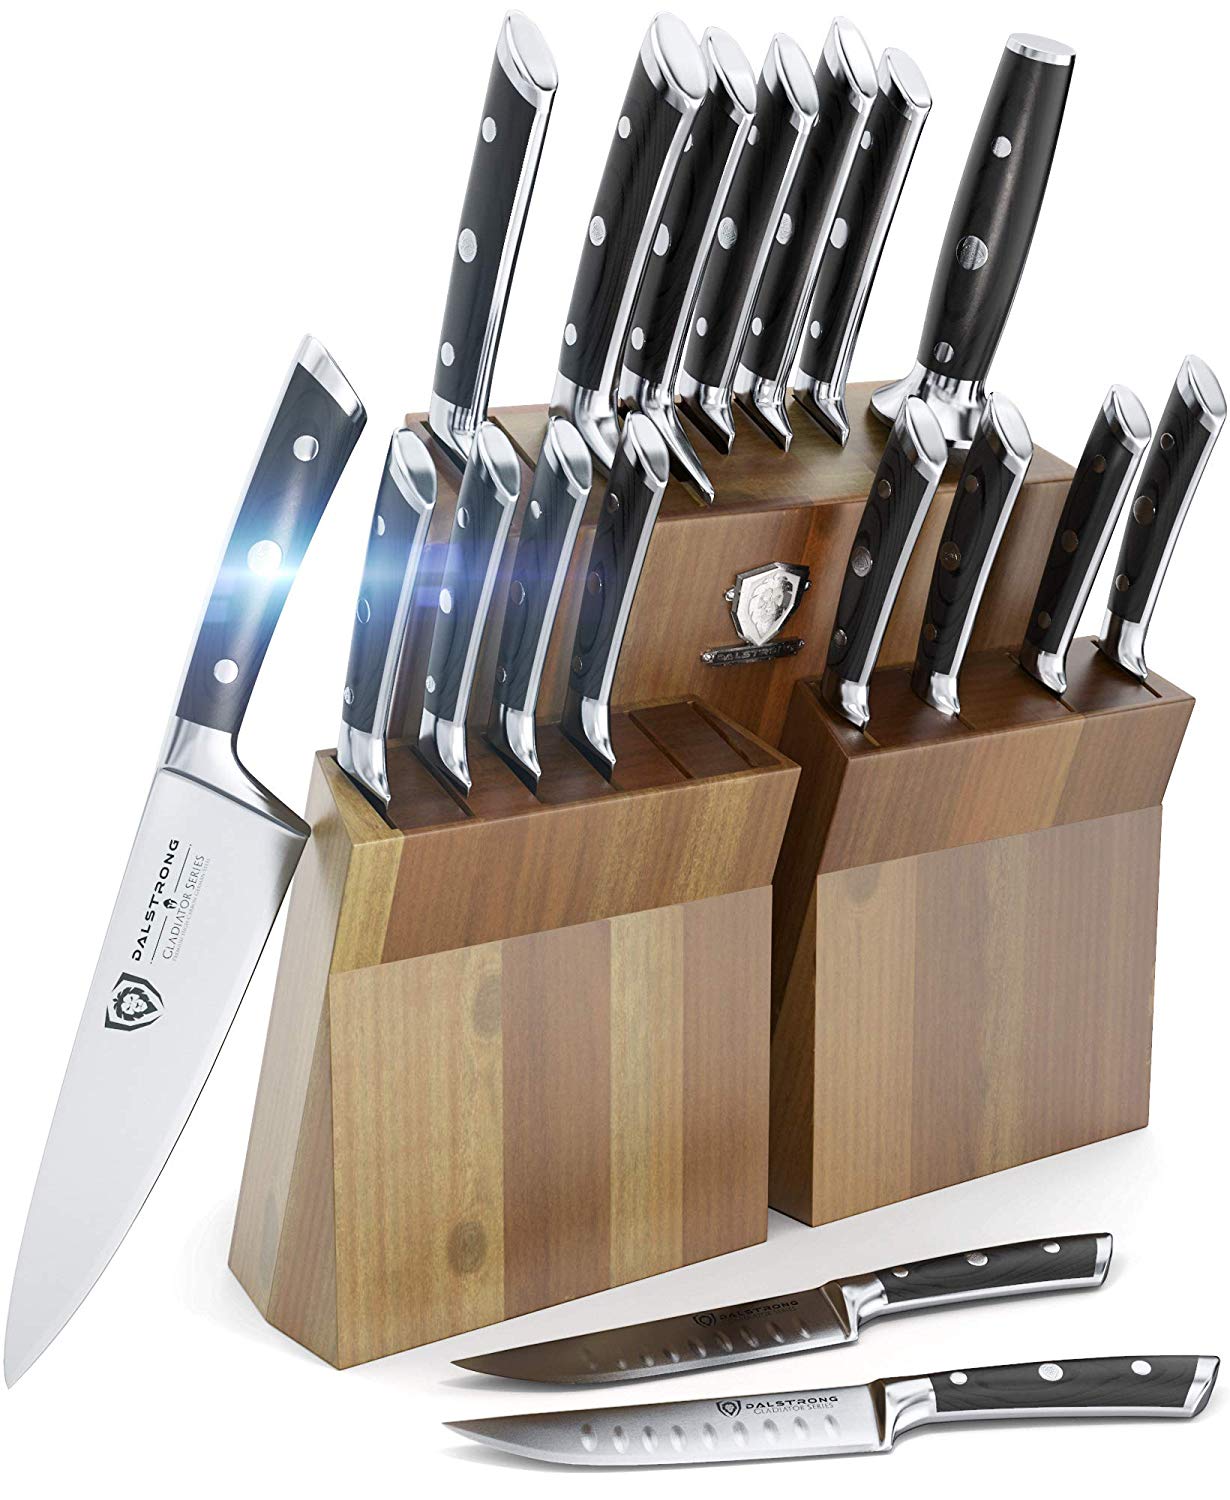 https://helpful-kitchen-tips.com/wp-content/uploads/2019/07/Knife-Set-Block.jpg